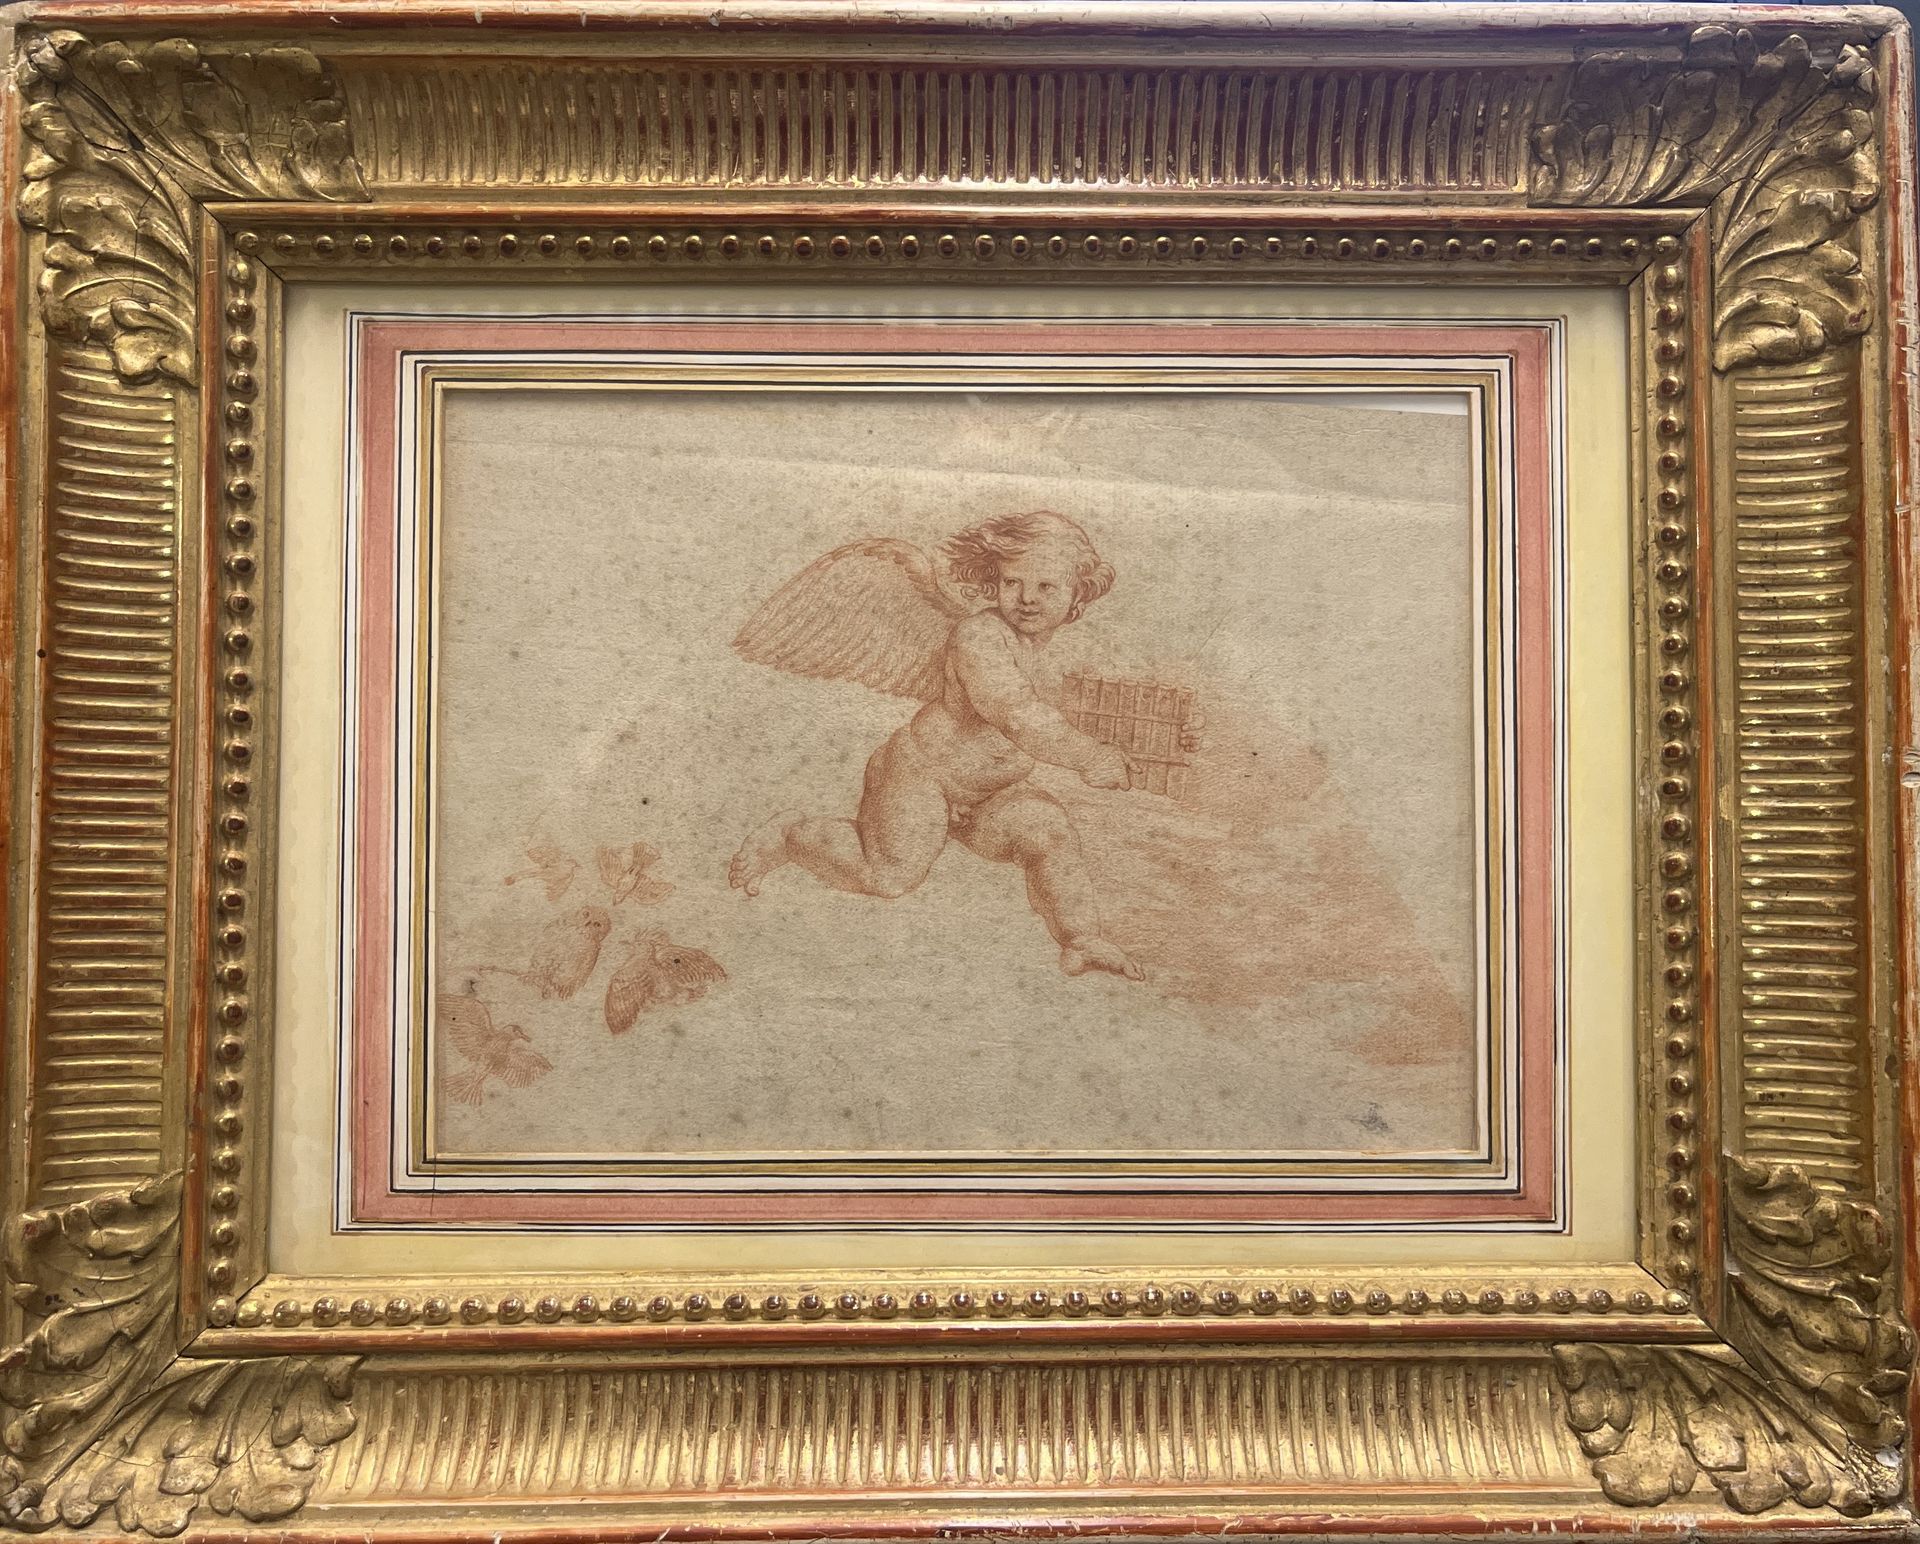 Null 18 世纪法国画派
安杰洛（Angelot），取材于意大利大师
桑吉尼 
17.5 x 23.5 厘米